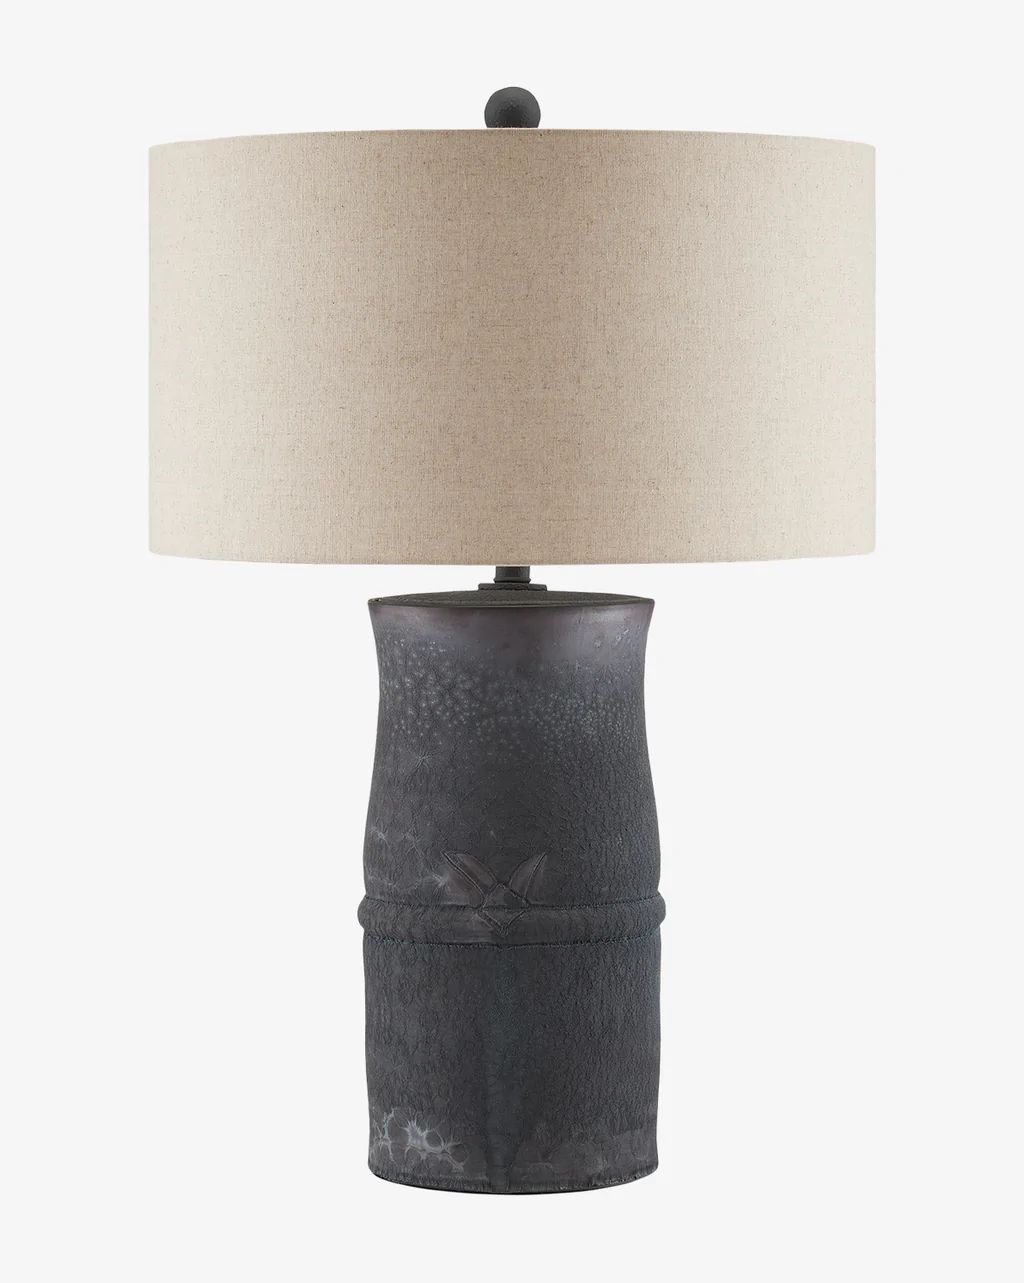 Croft Table Lamp | McGee & Co.